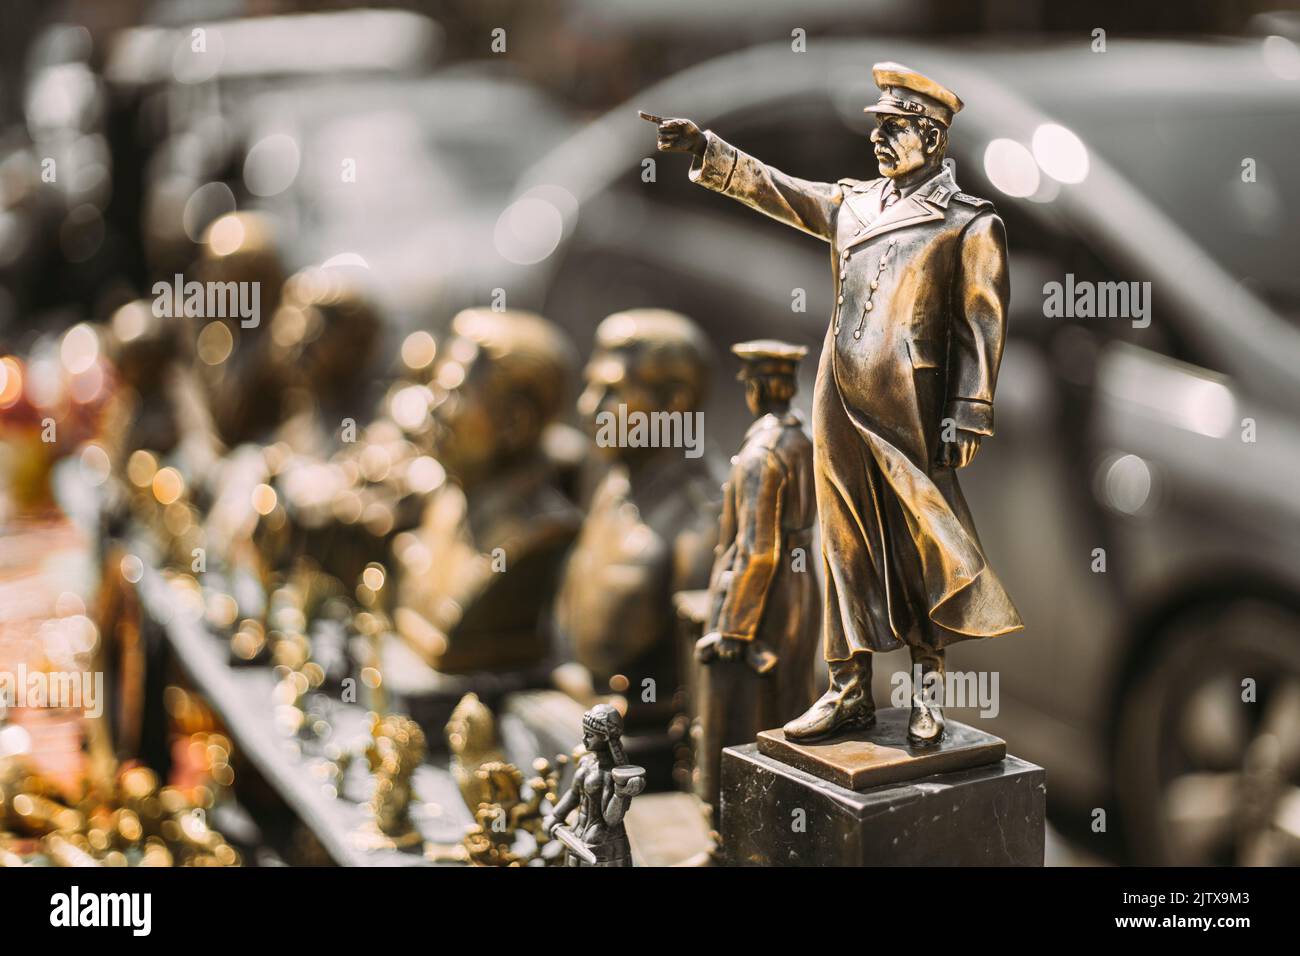 Miniature Bronze Figurines Of Joseph Stalin At Flea Market. Soviet Leader Josef Stalin. Concept Of Nostalgia For Soviet Union. Stock Photo